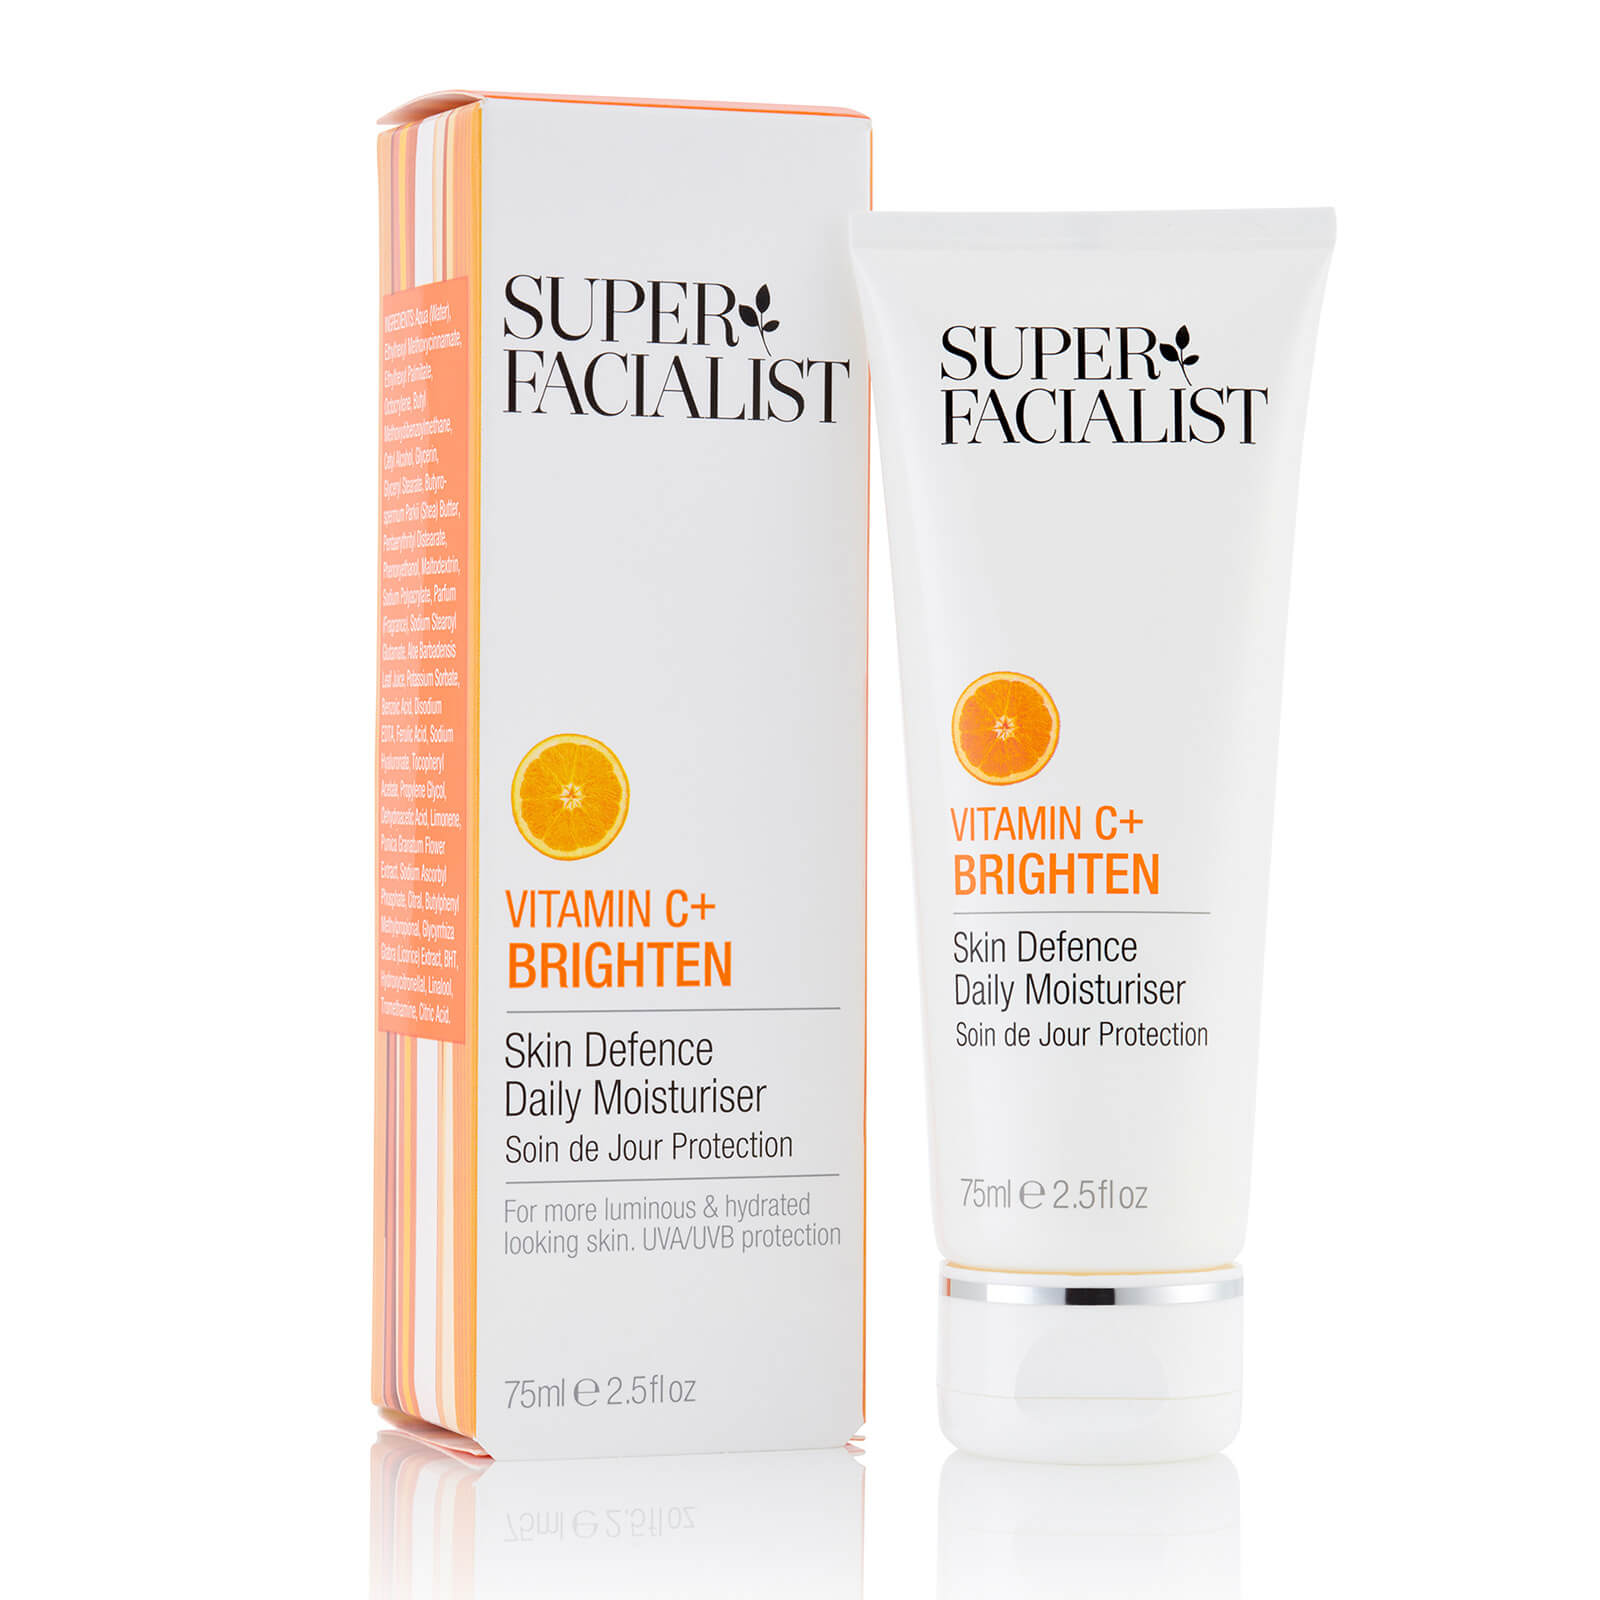 Super Facialist Vitamin C+ Brighten Skin Defence Daily Moisturiser - 75ml In White